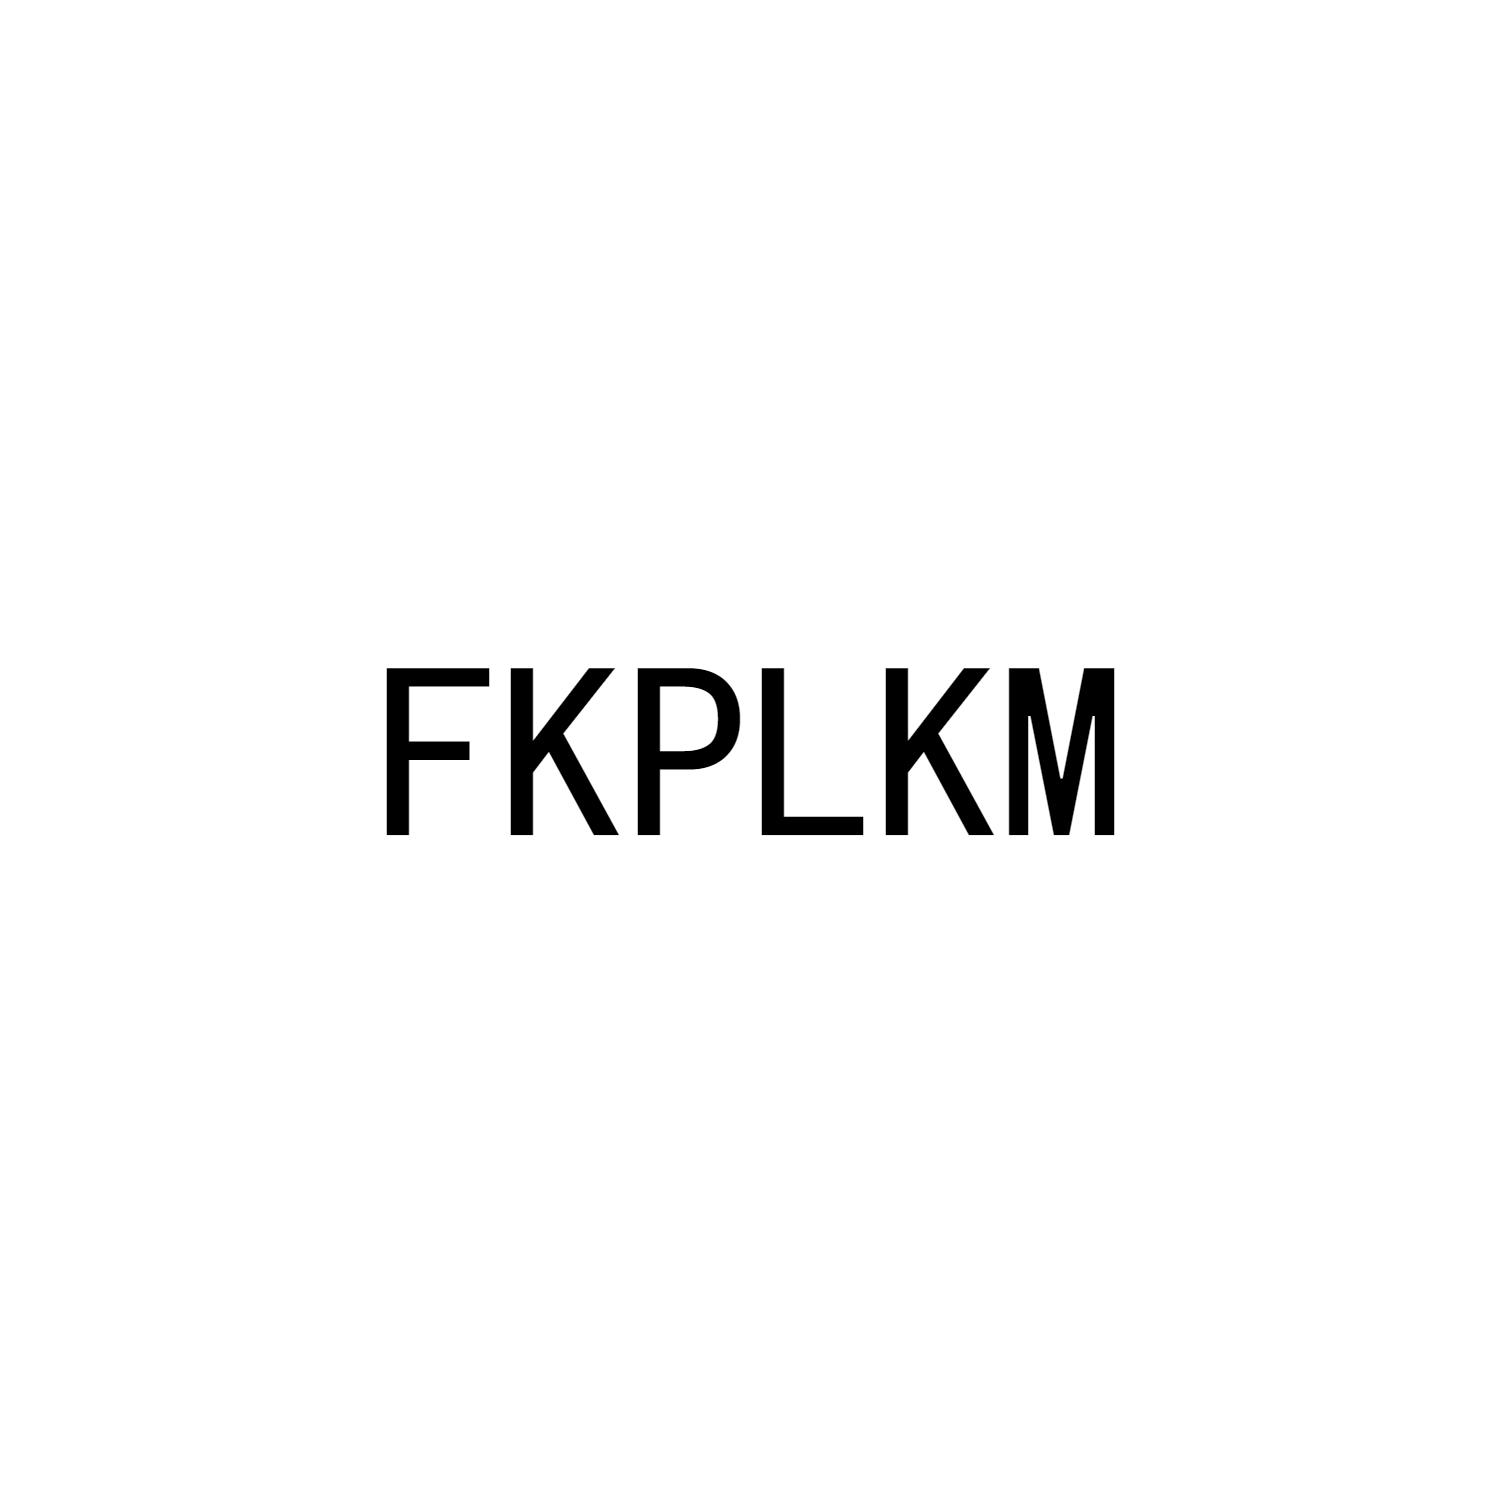 FKPLKM